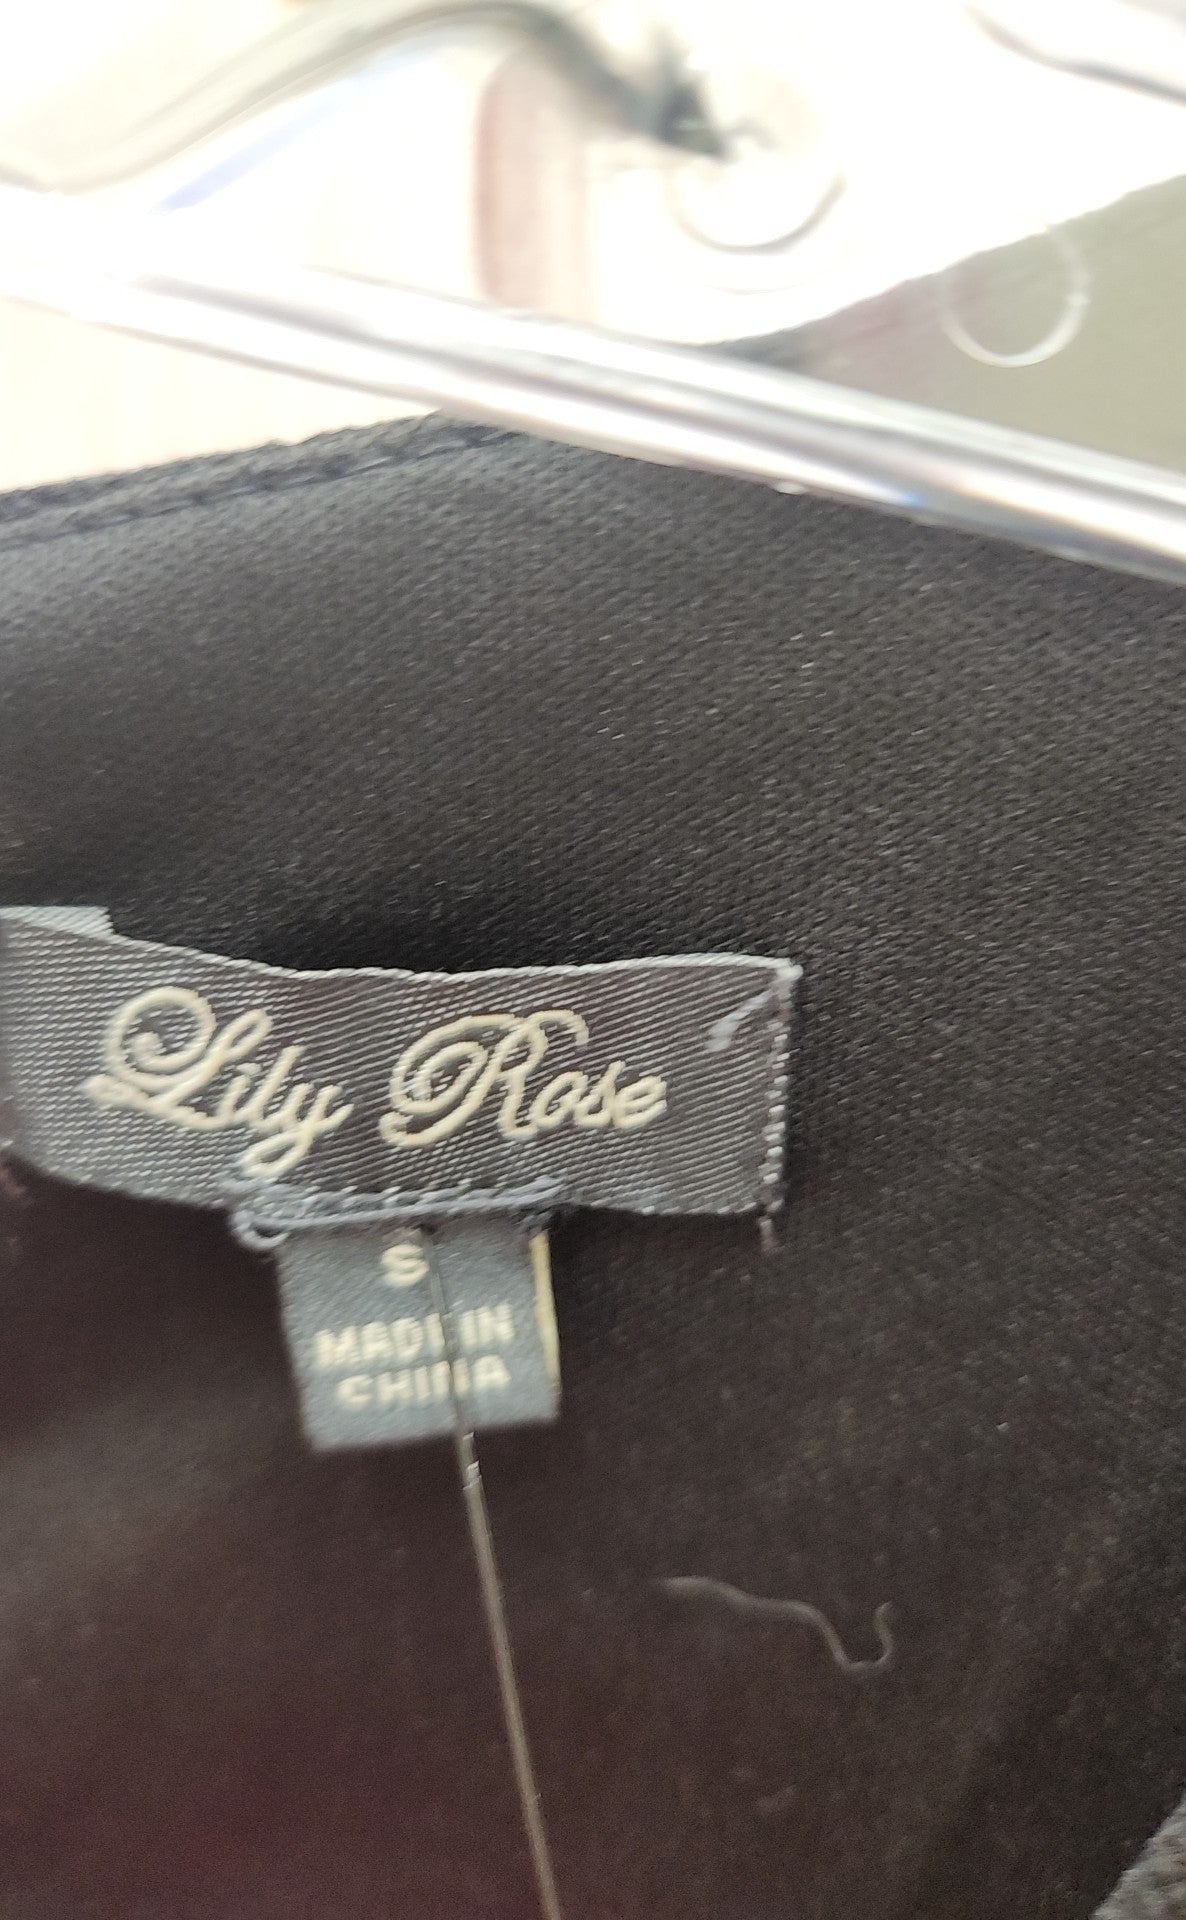 Lily Rose Women's Size S Black Floral Romper